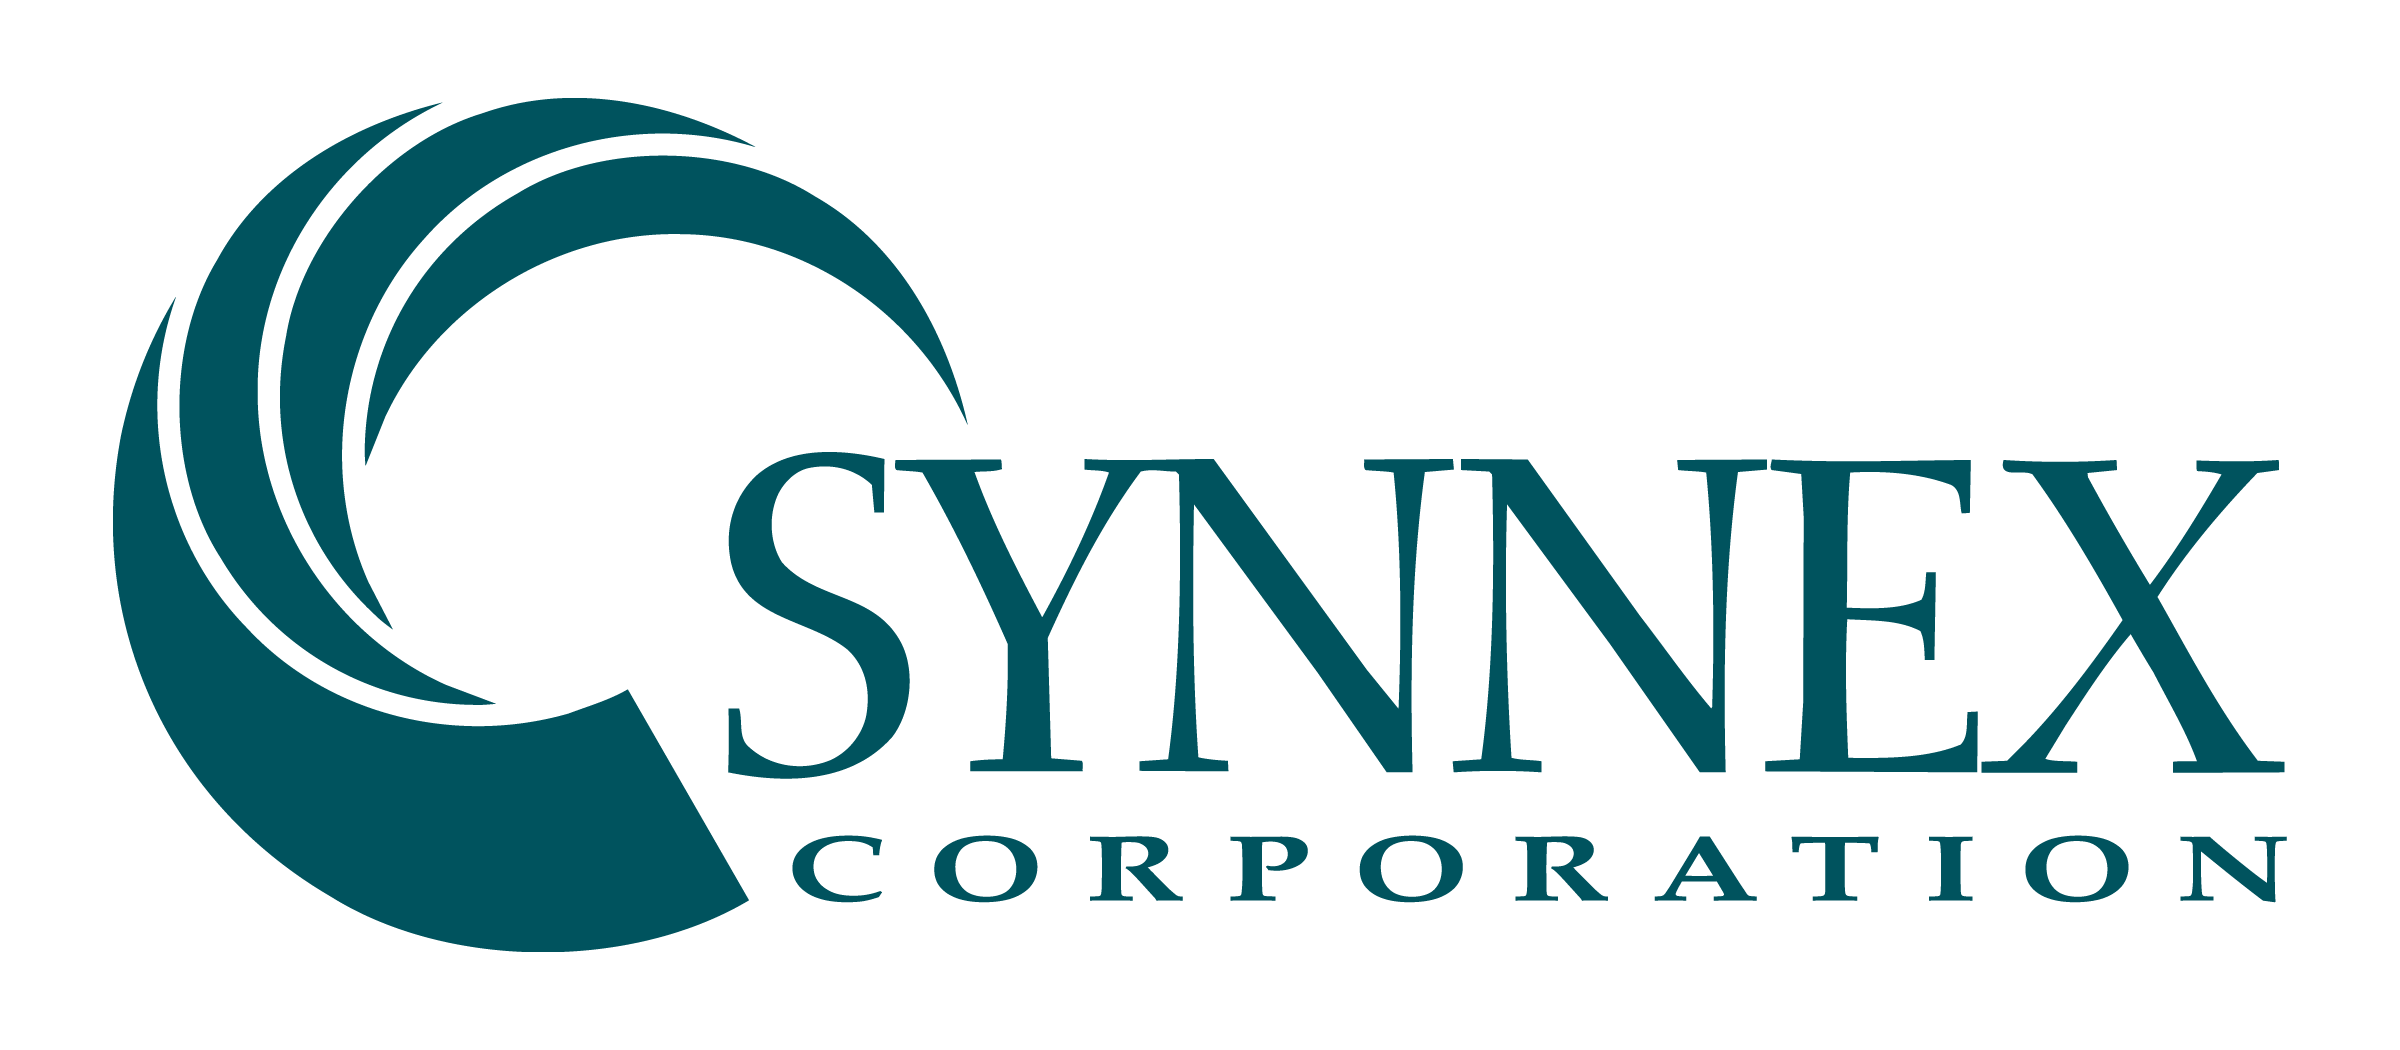 Synnex Logo PNG Image